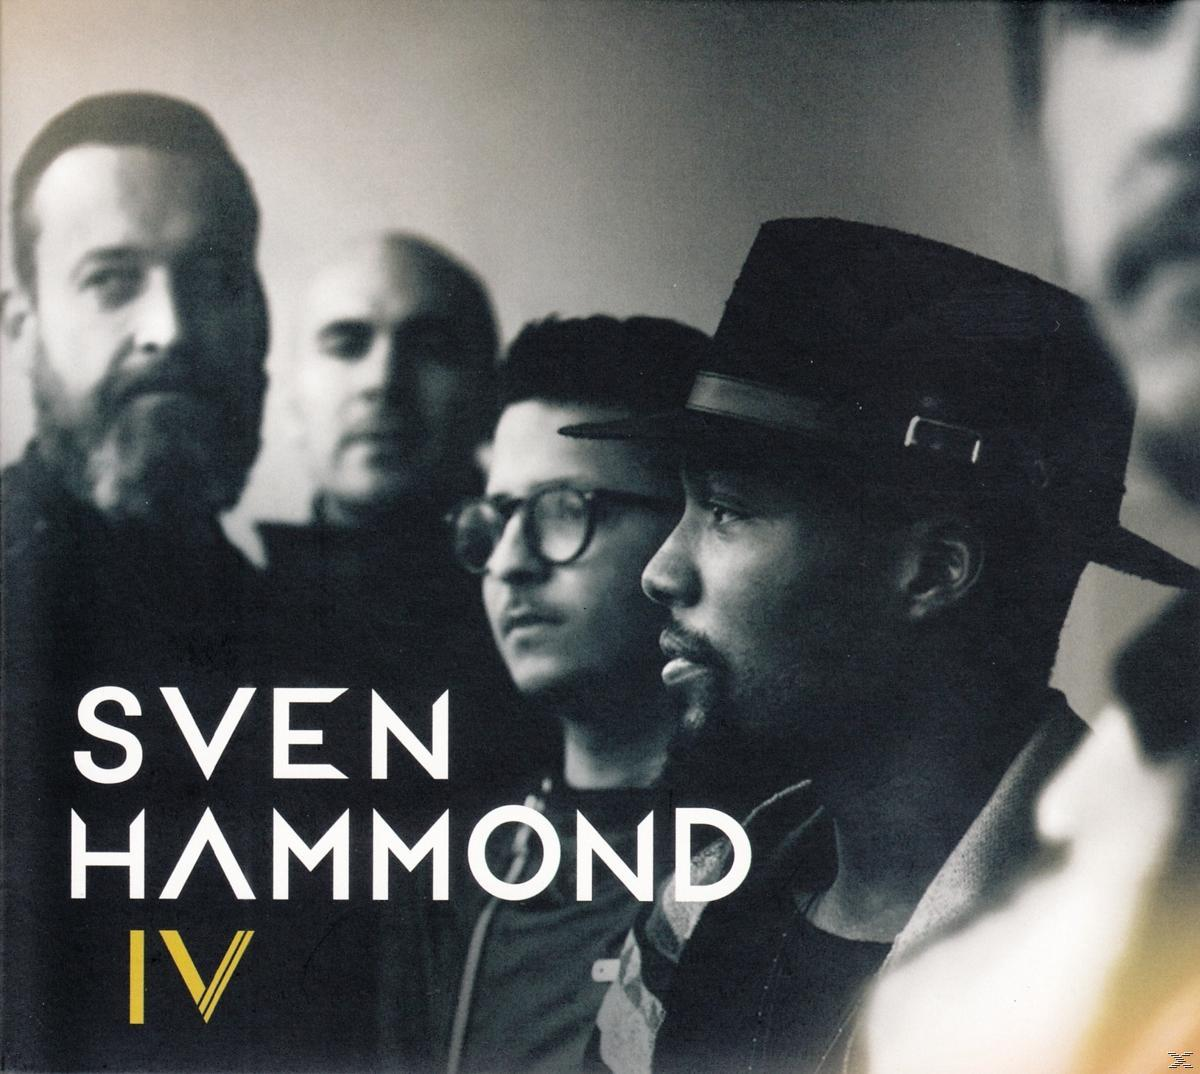 Sven Hammond - (CD) IV 